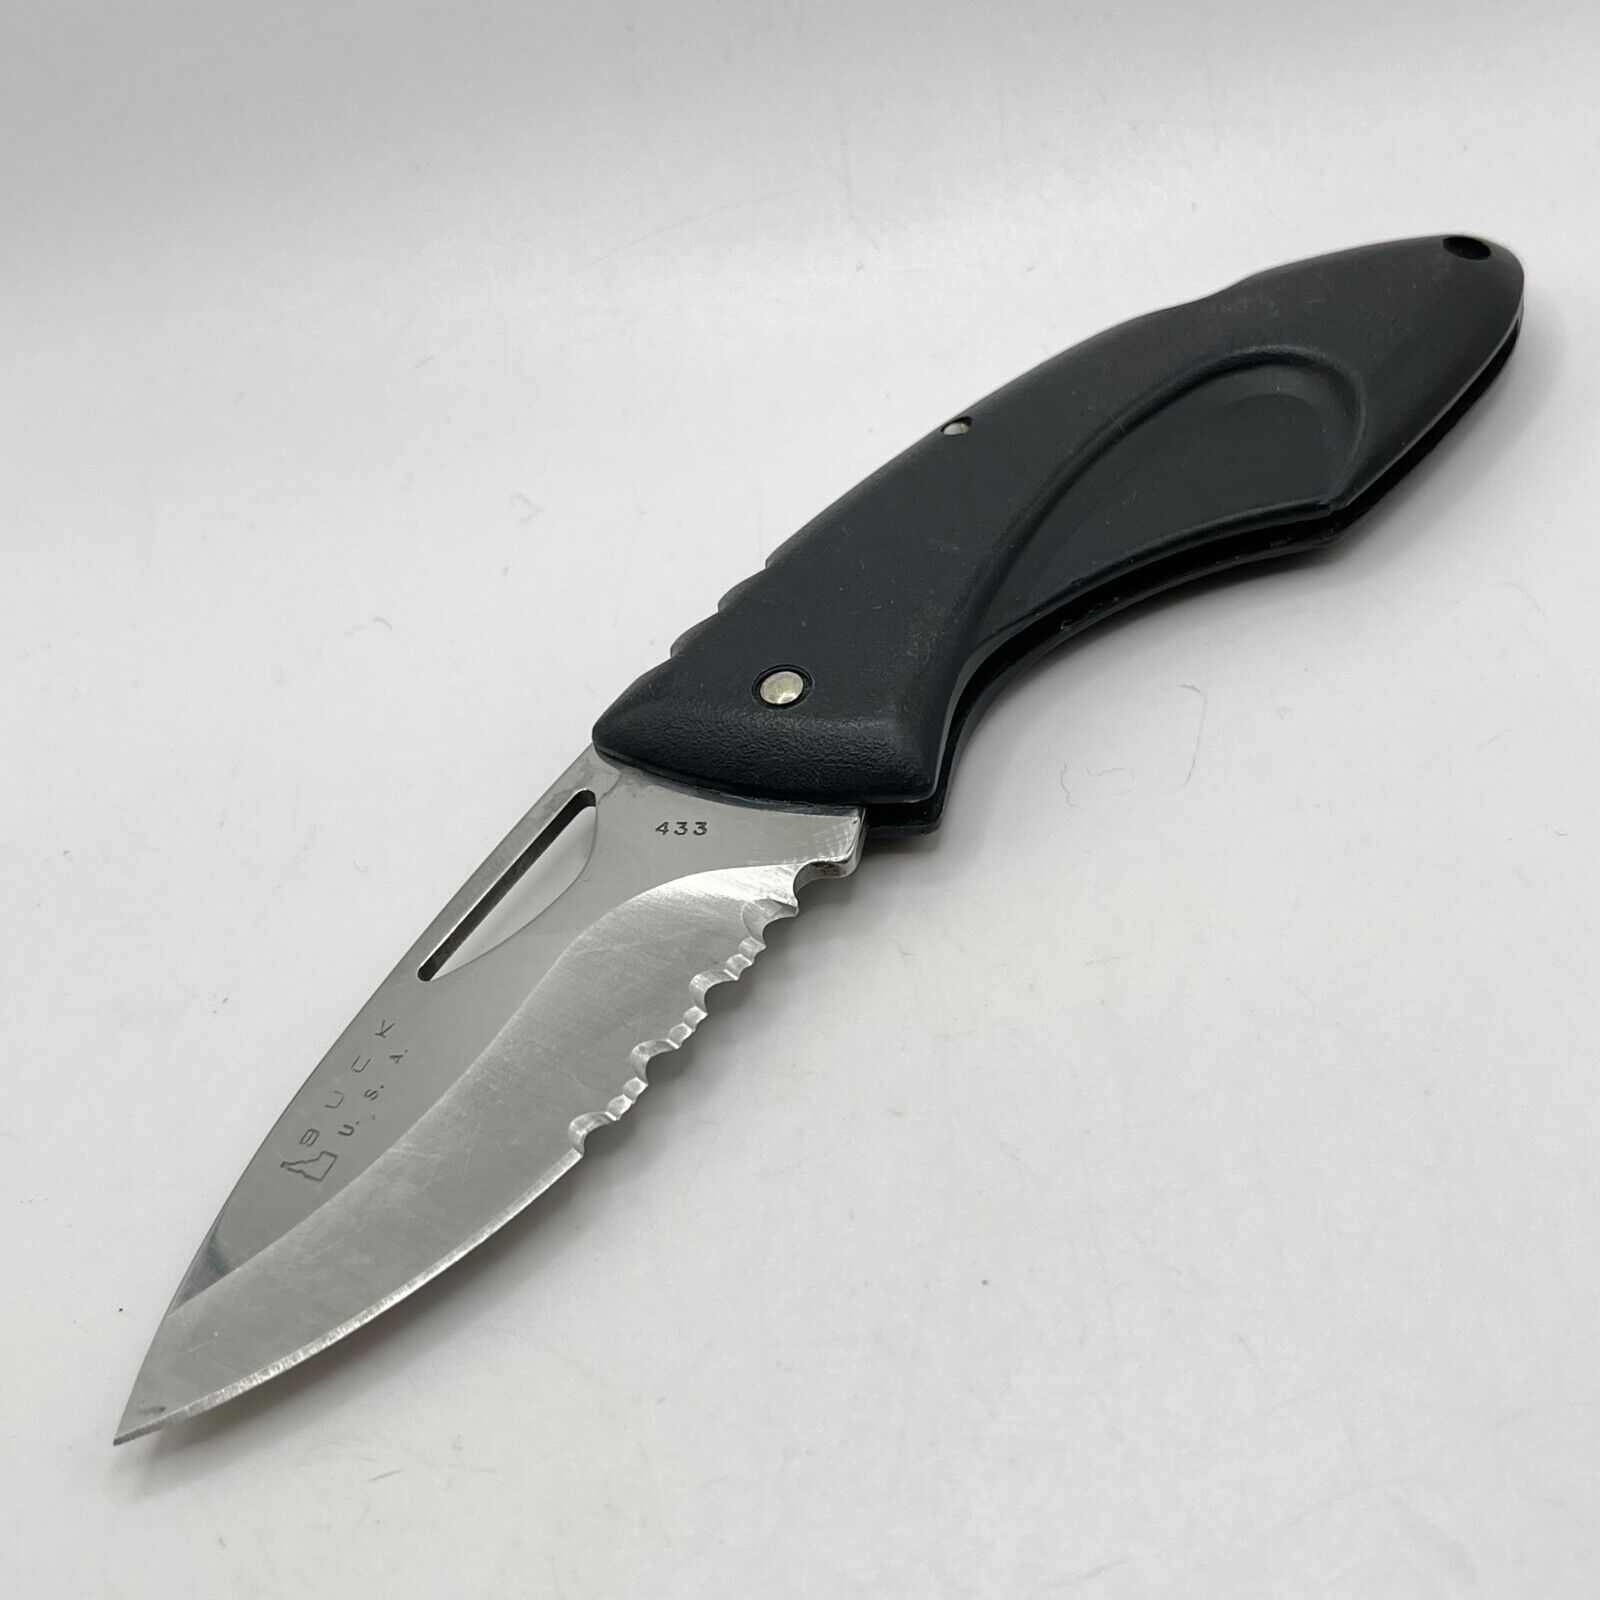 Buck 433 Juno Discontinued Vintage Pocket Knife - Excellent condition